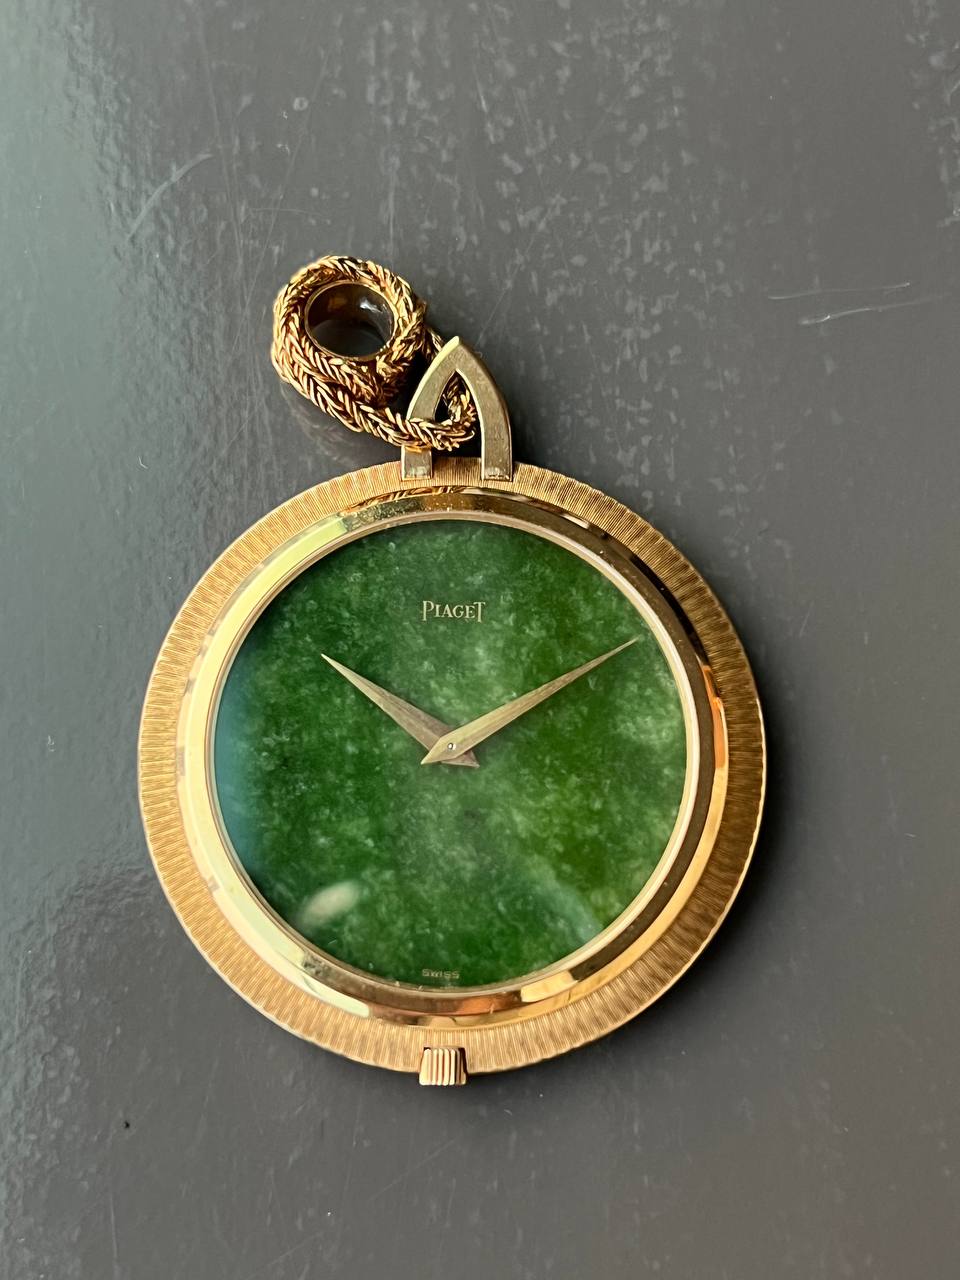 Piaget Pendant Pocket Watch Green Jade Dial